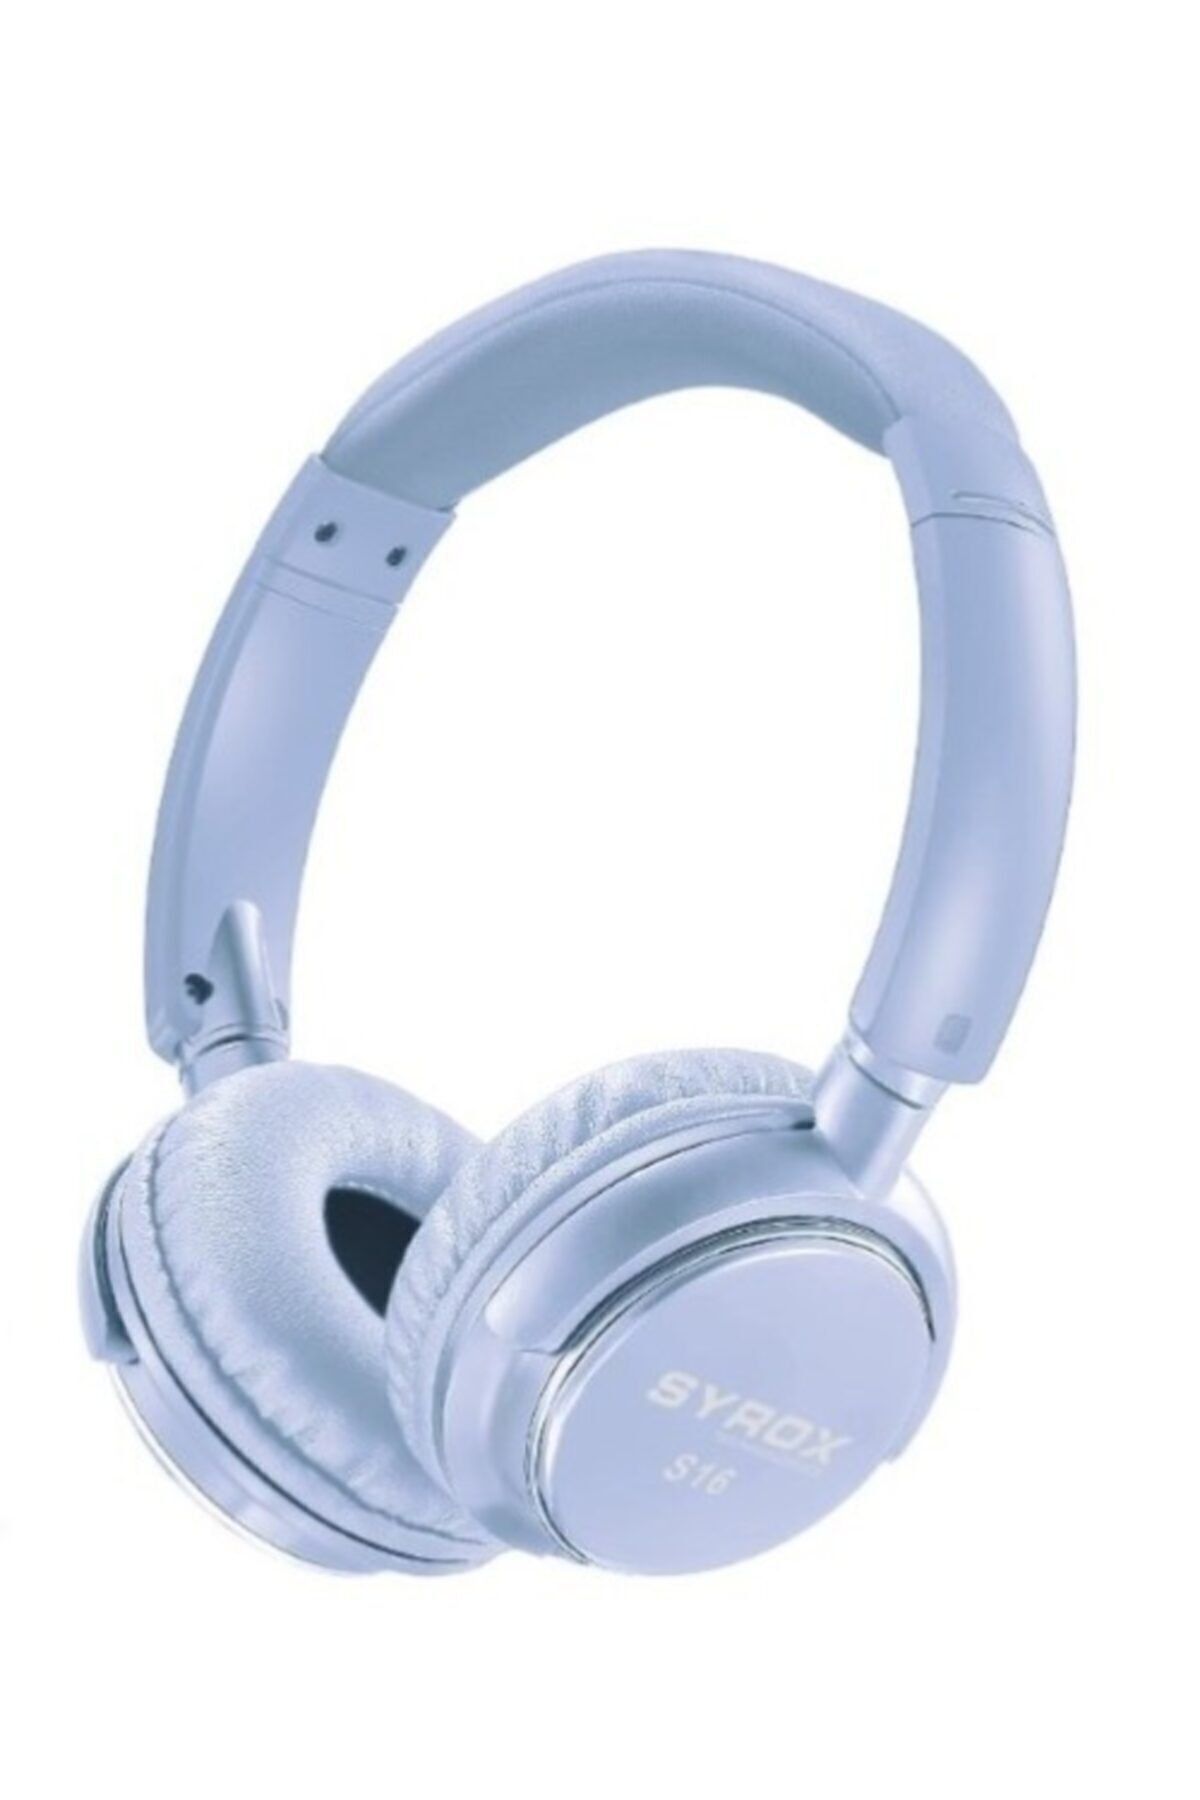 Syrox S16 Kablosuz Hafıza Kartlı Bluetooth Kulaküstü Kulaklık Mavi Renk